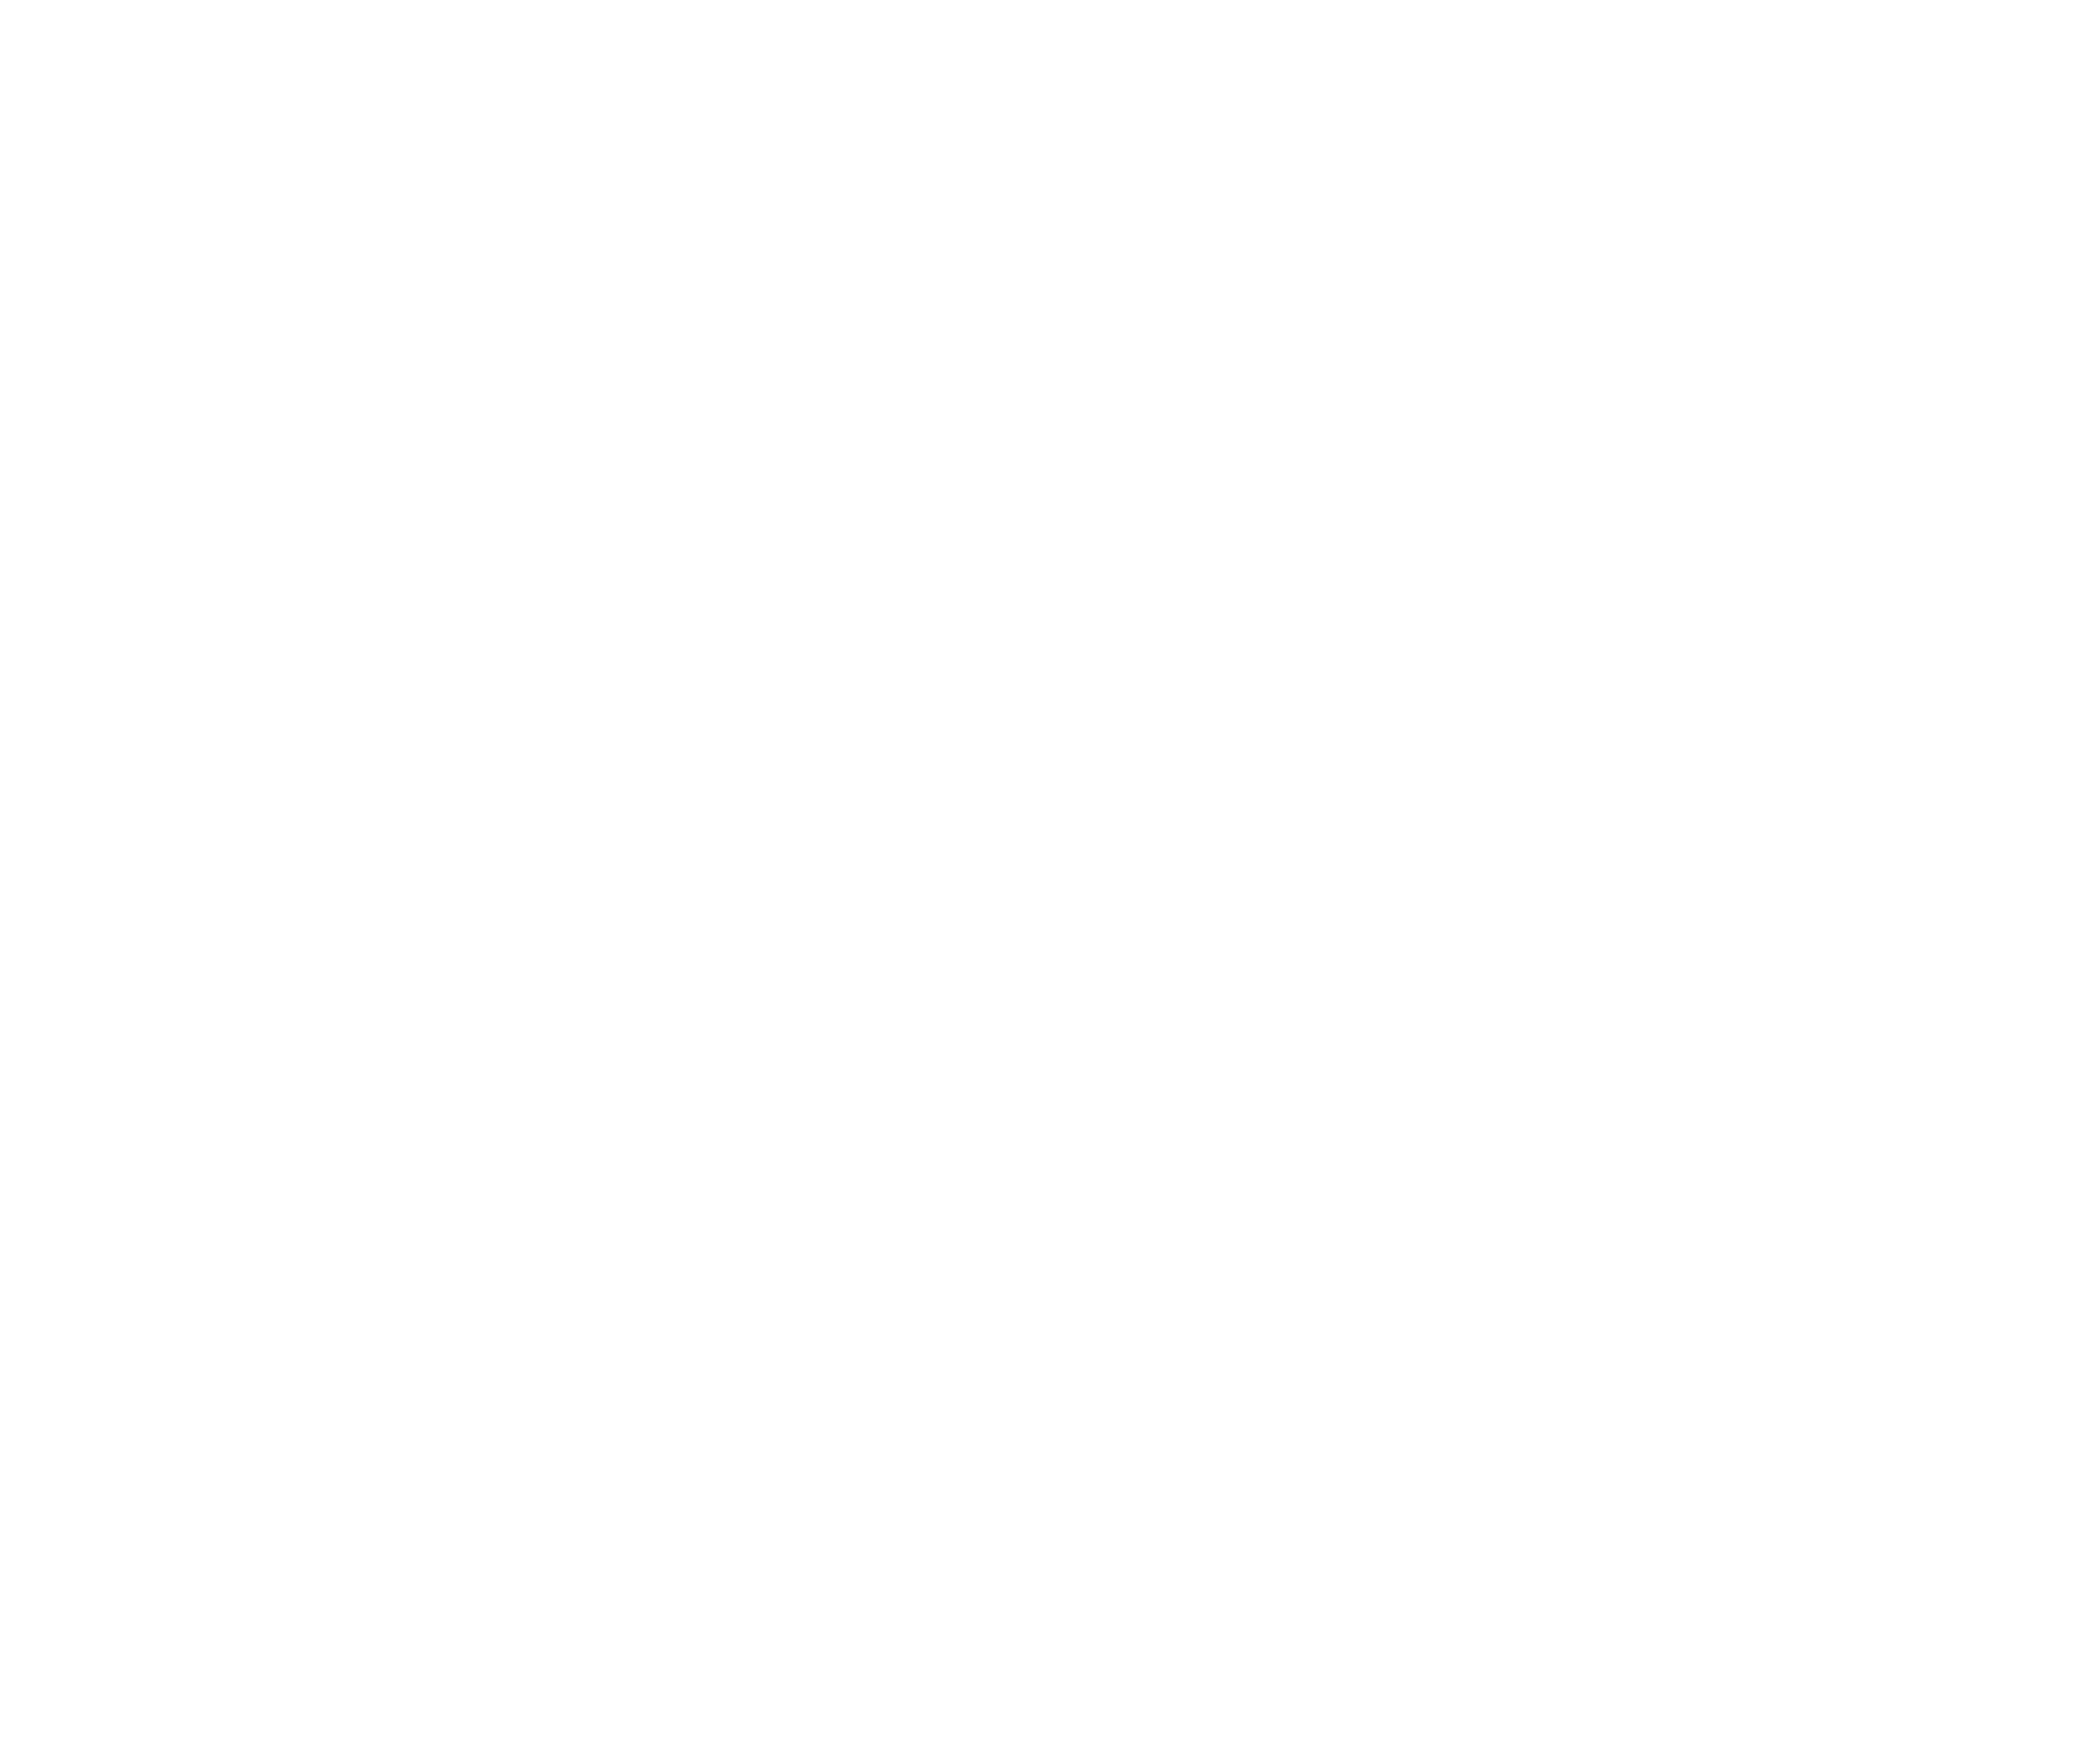 reddit-logo-reddit-logo-png-clip-art-library